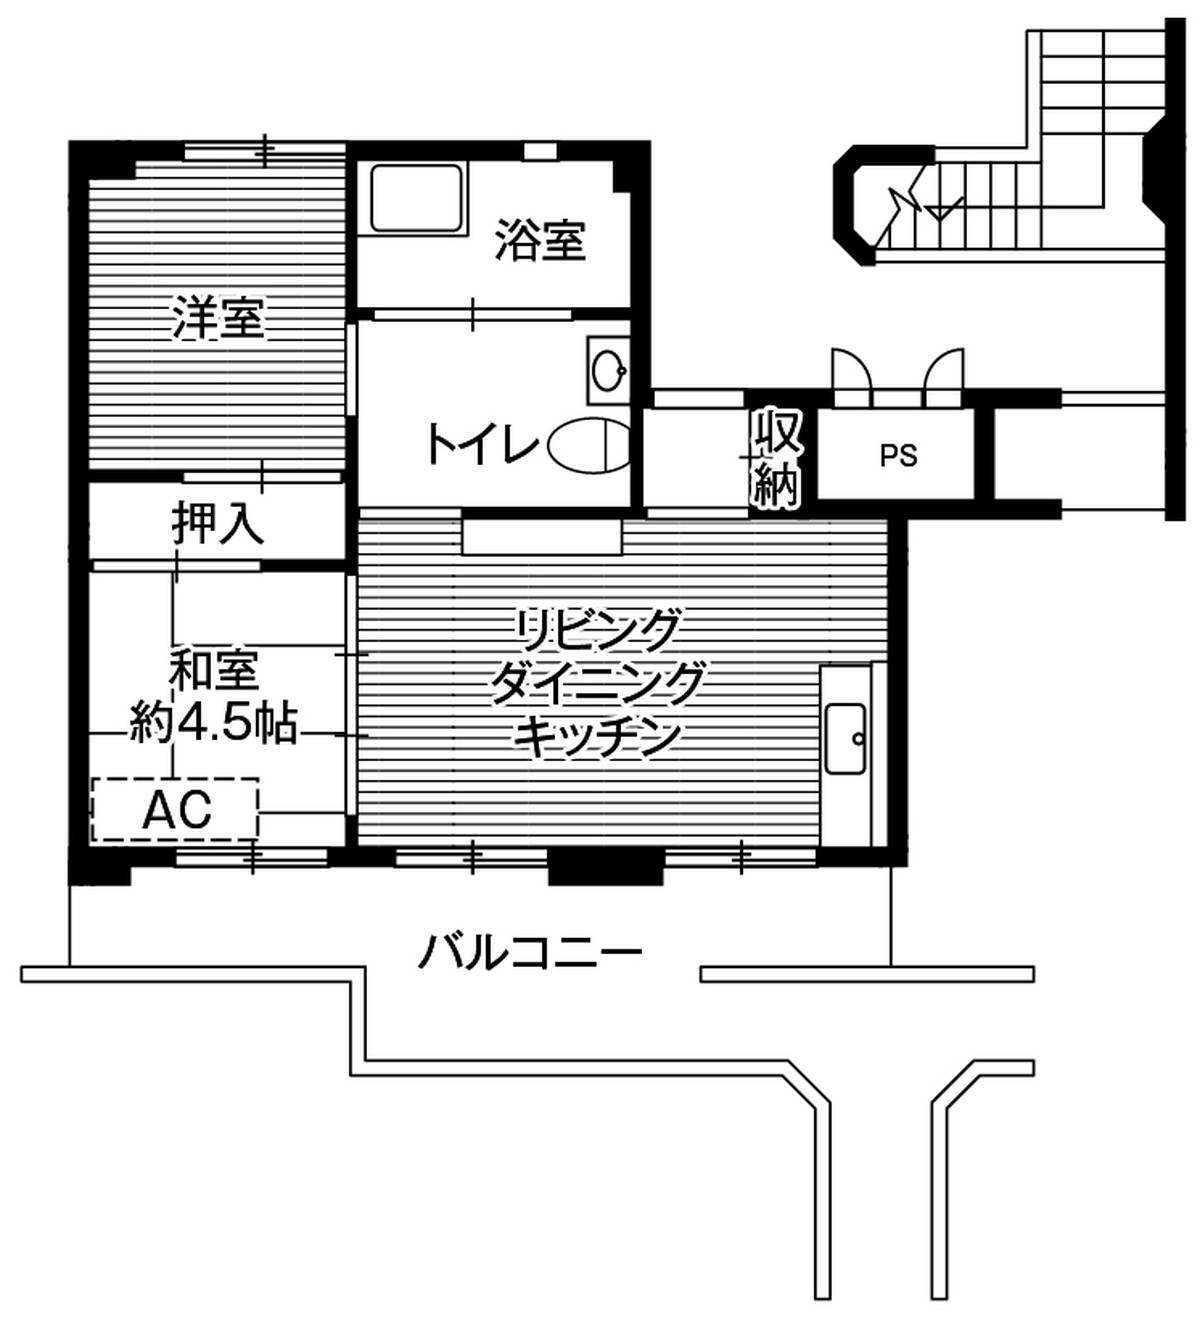 2LDK floorplan of Village House Onahama in Iwaki-shi